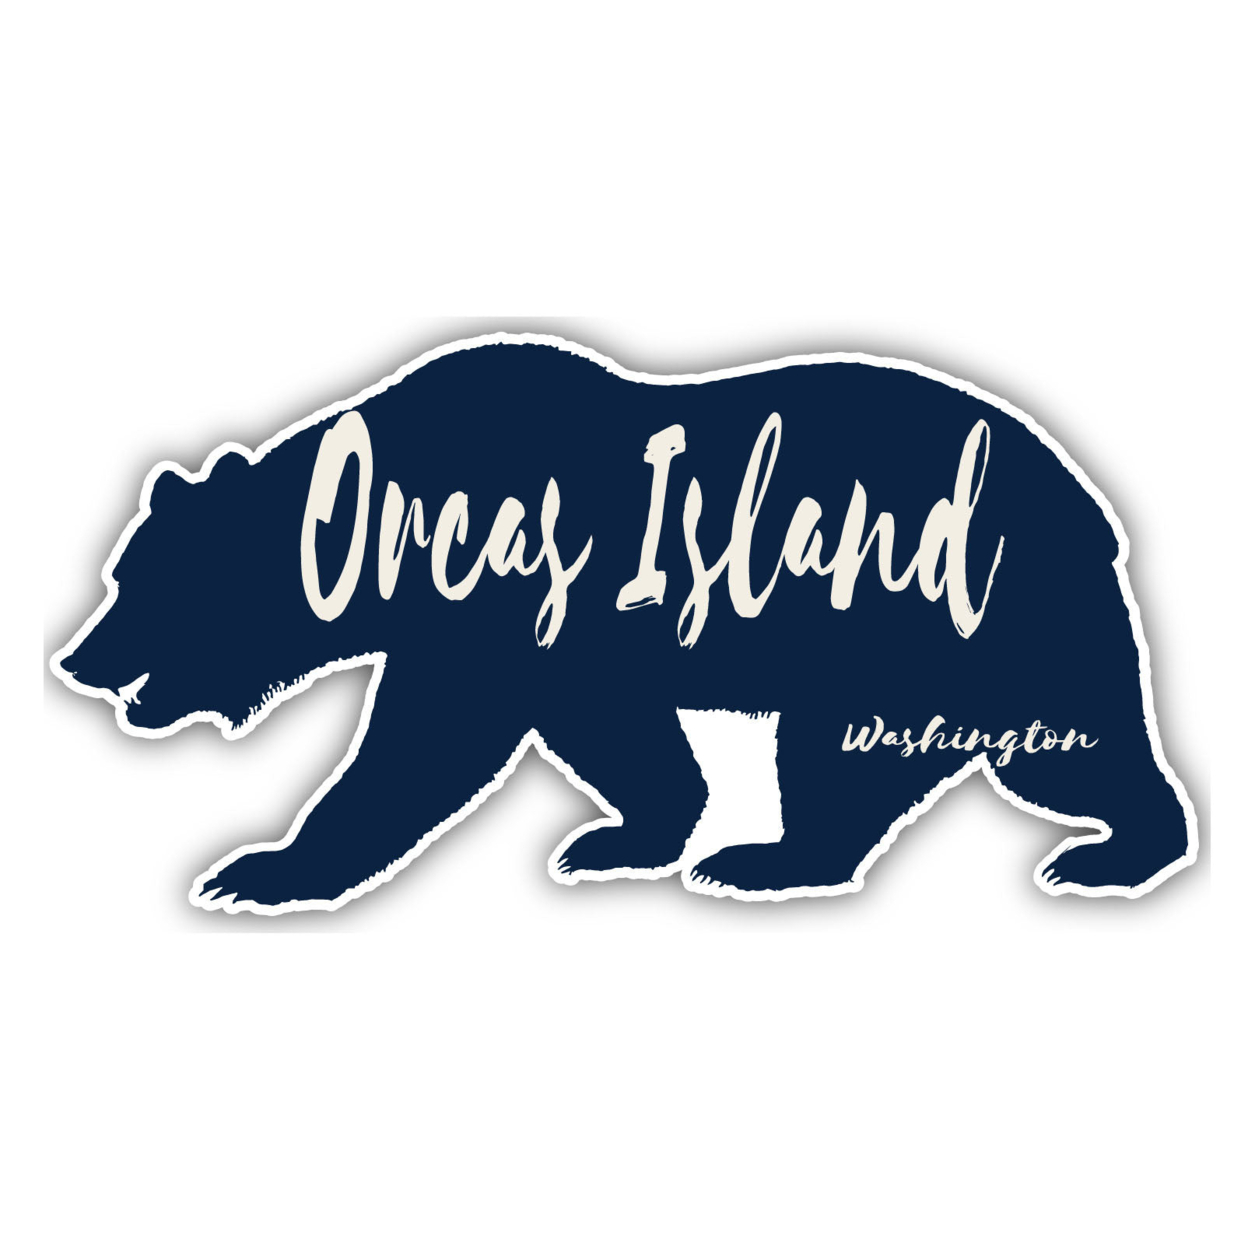 Orcas Island Washington Souvenir Decorative Stickers (Choose Theme And Size) - Single Unit, 4-Inch, Bear